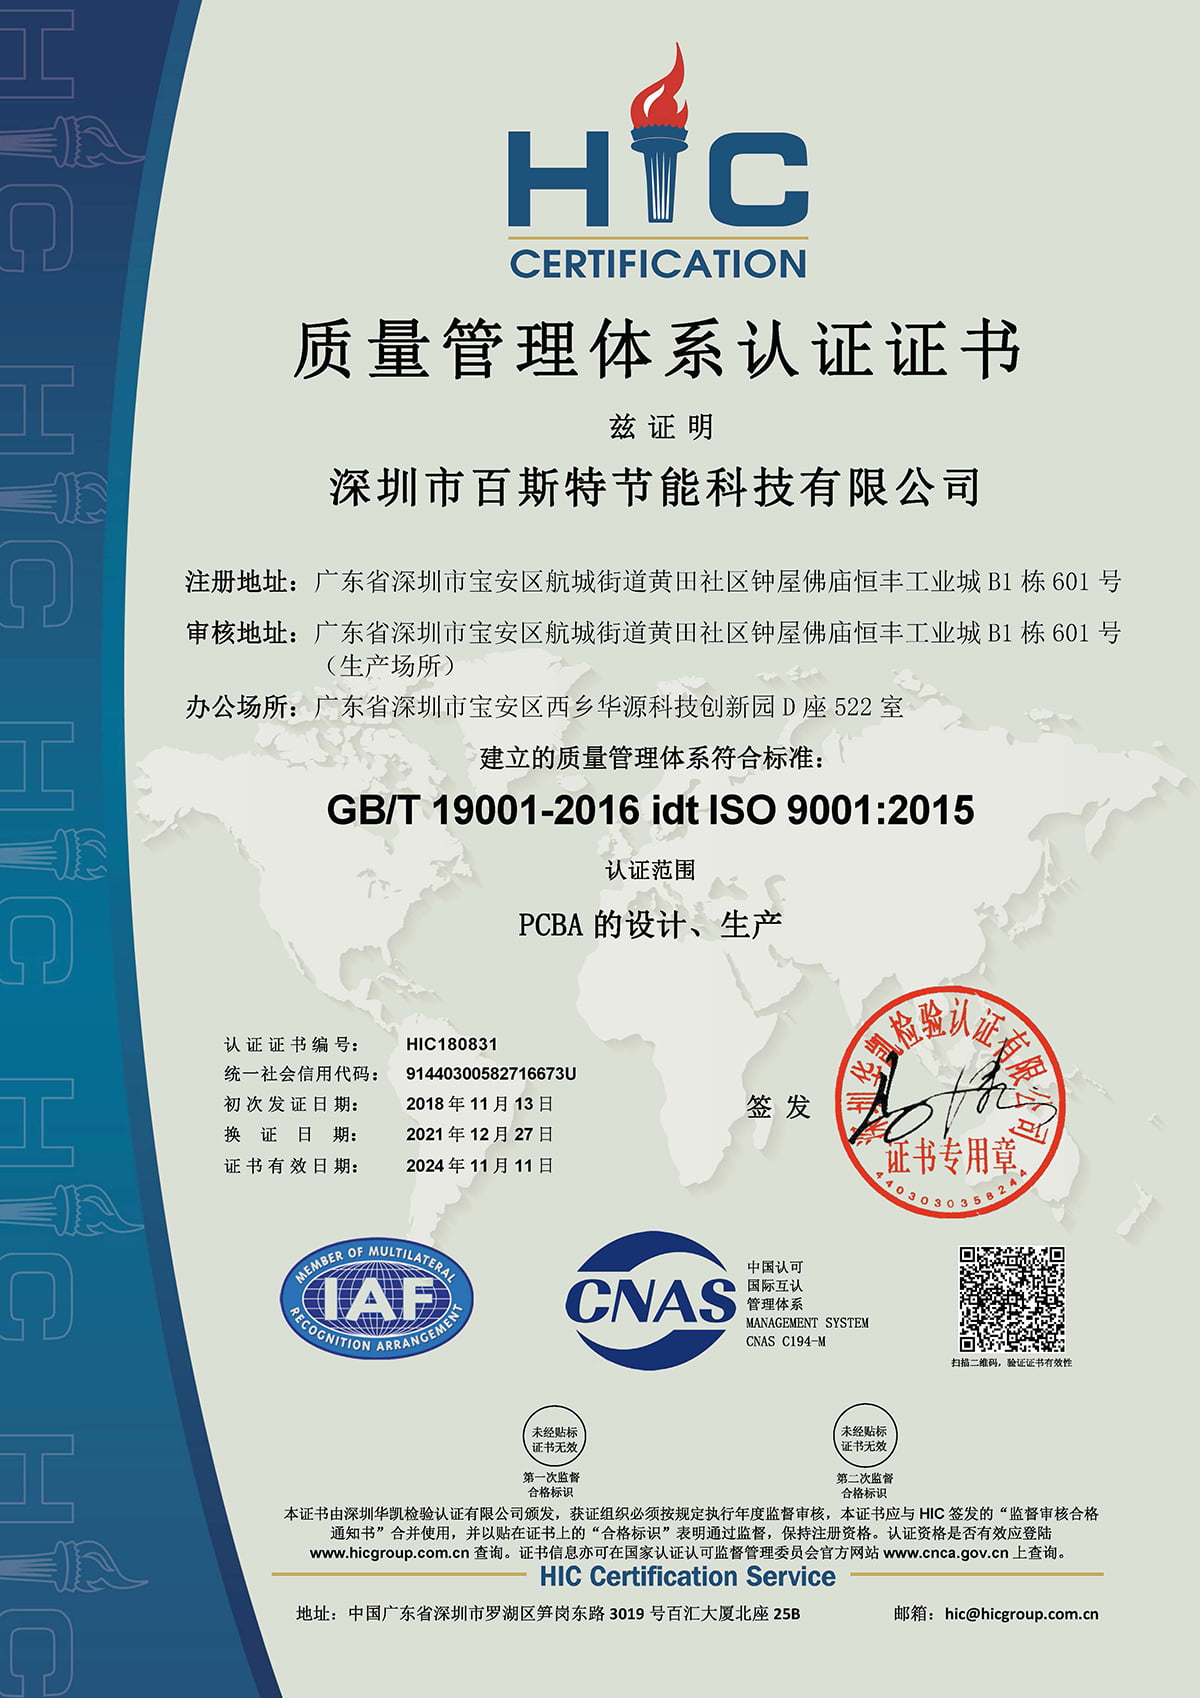 Bester Passes ISO 9001:2015 Certification Audit